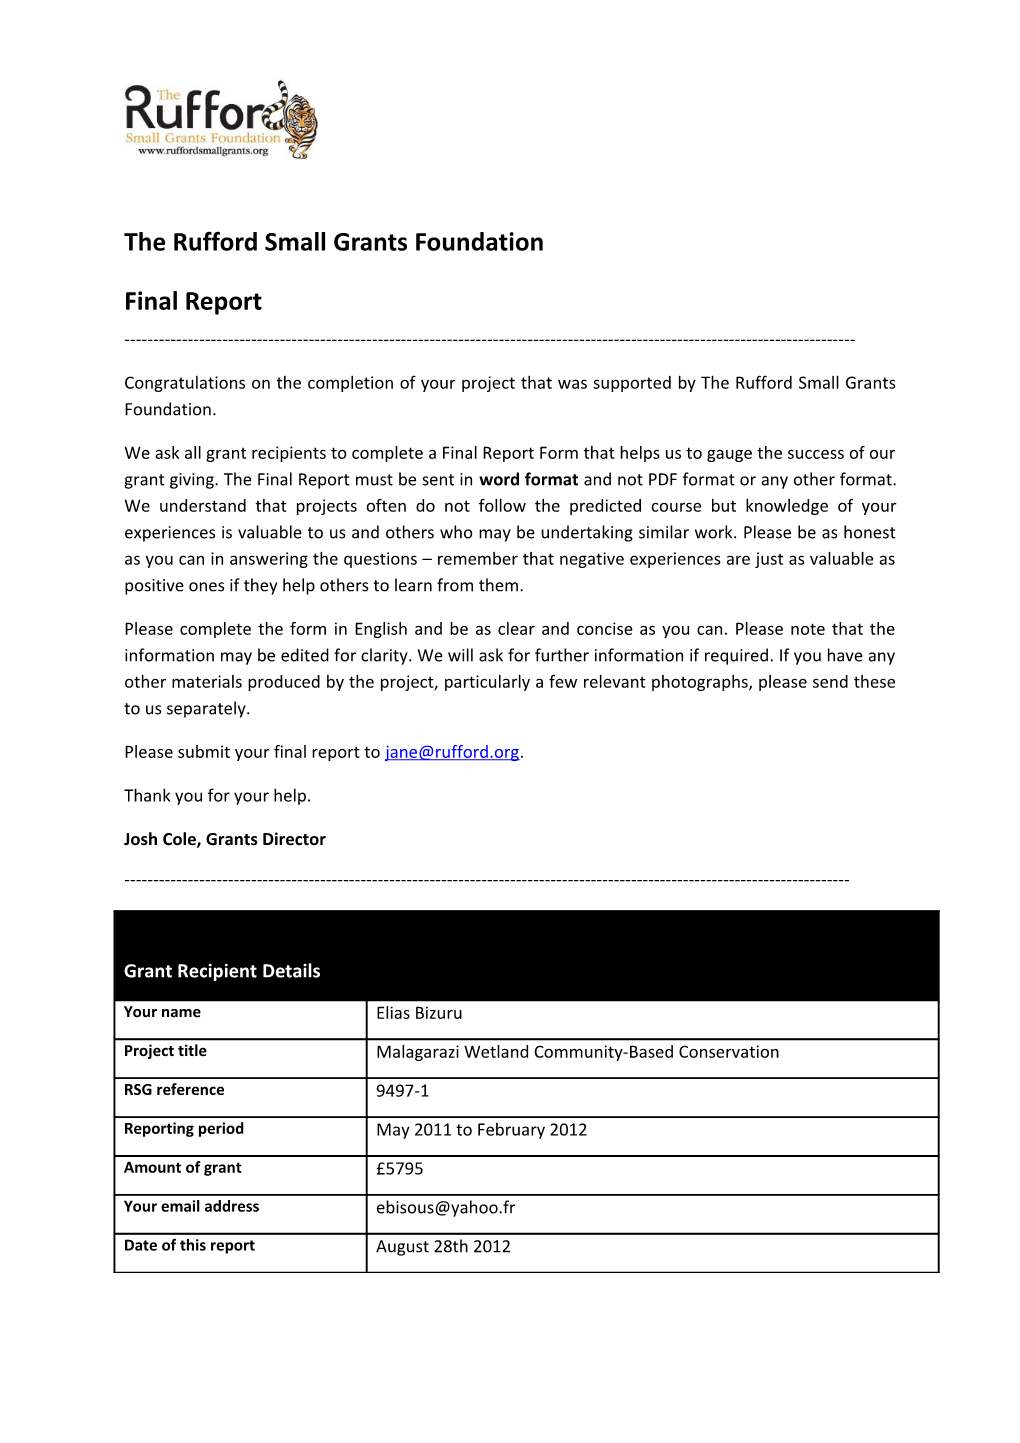 The Rufford Small Grants Foundation s1